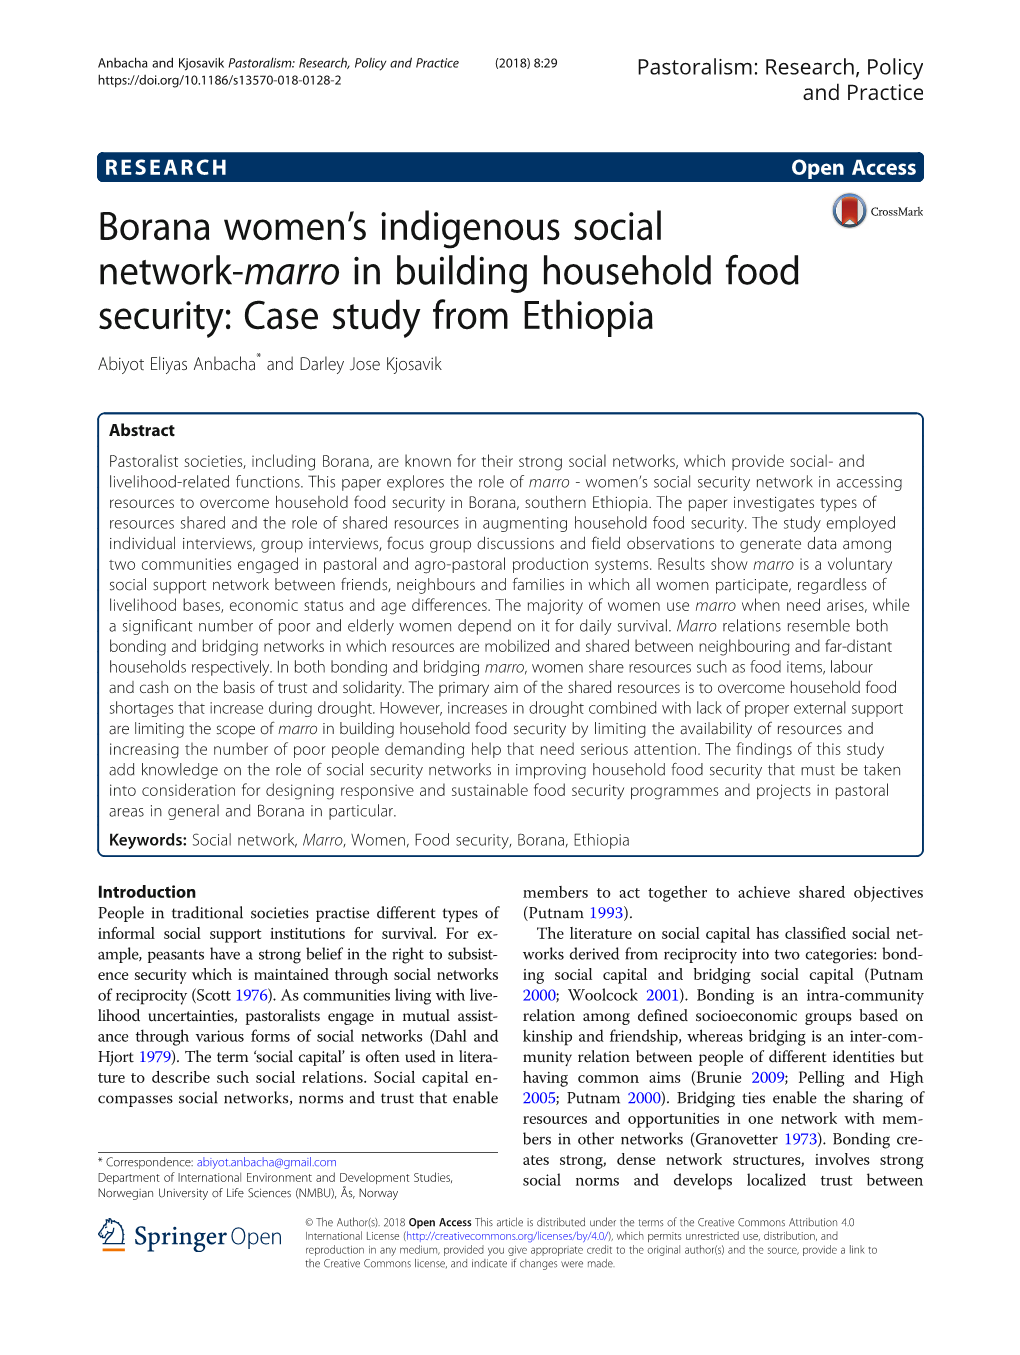 Borana Women's Indigenous Social Network-Marro in Building